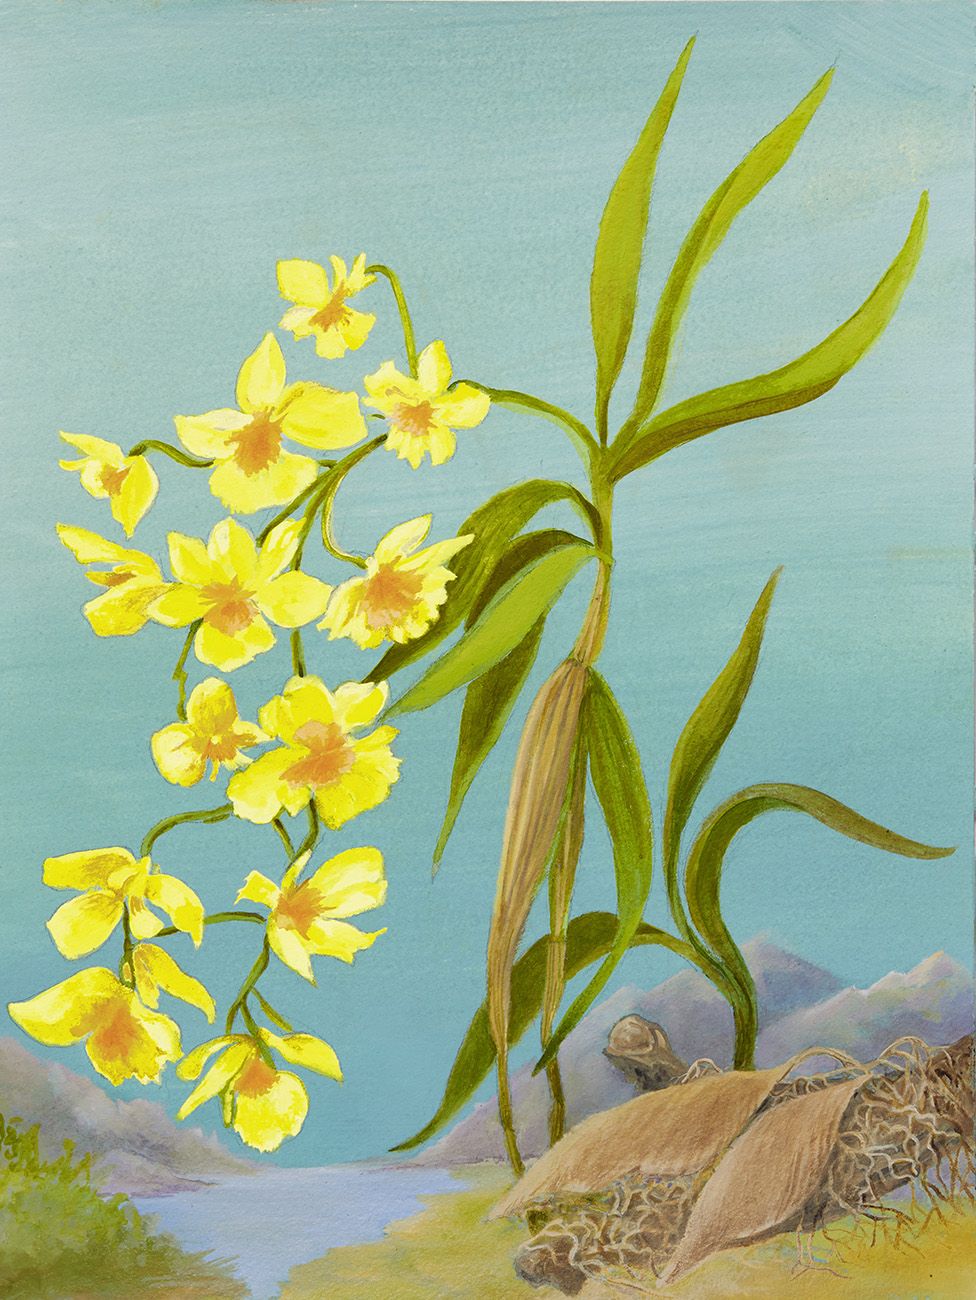 Gold Orchid illustration